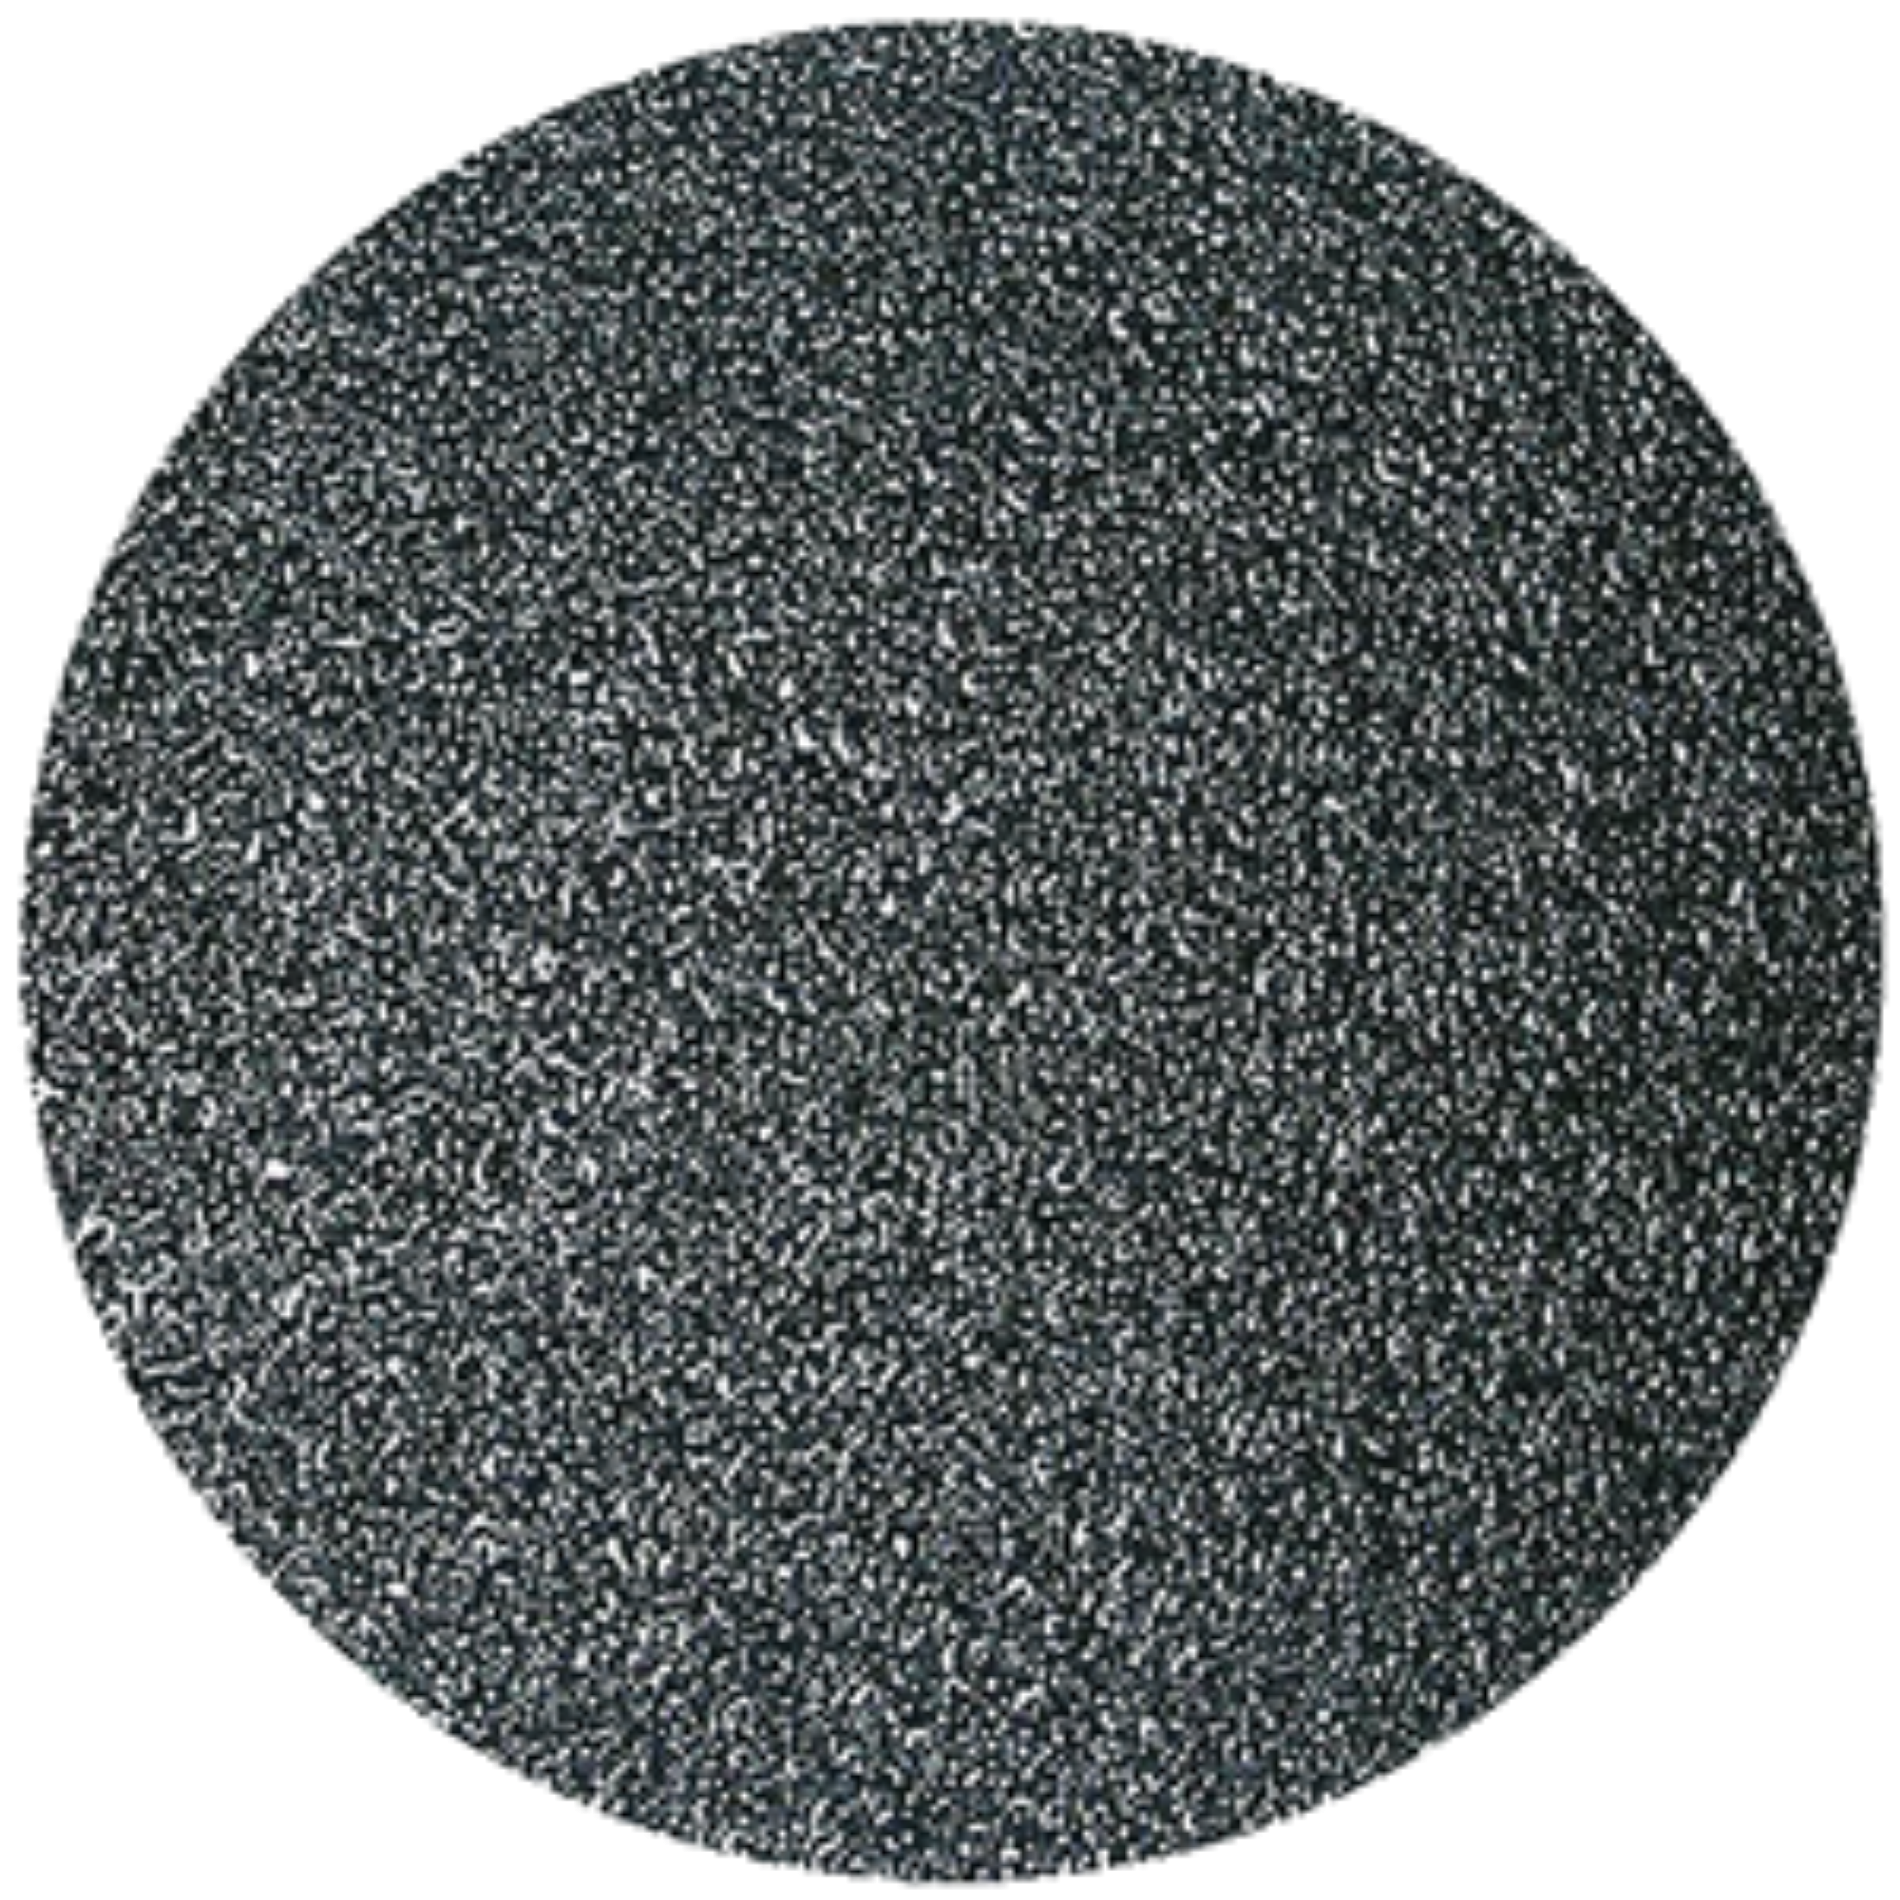 Picture of Makita Abrasive Floor Sanding Disc 40G (180mm)